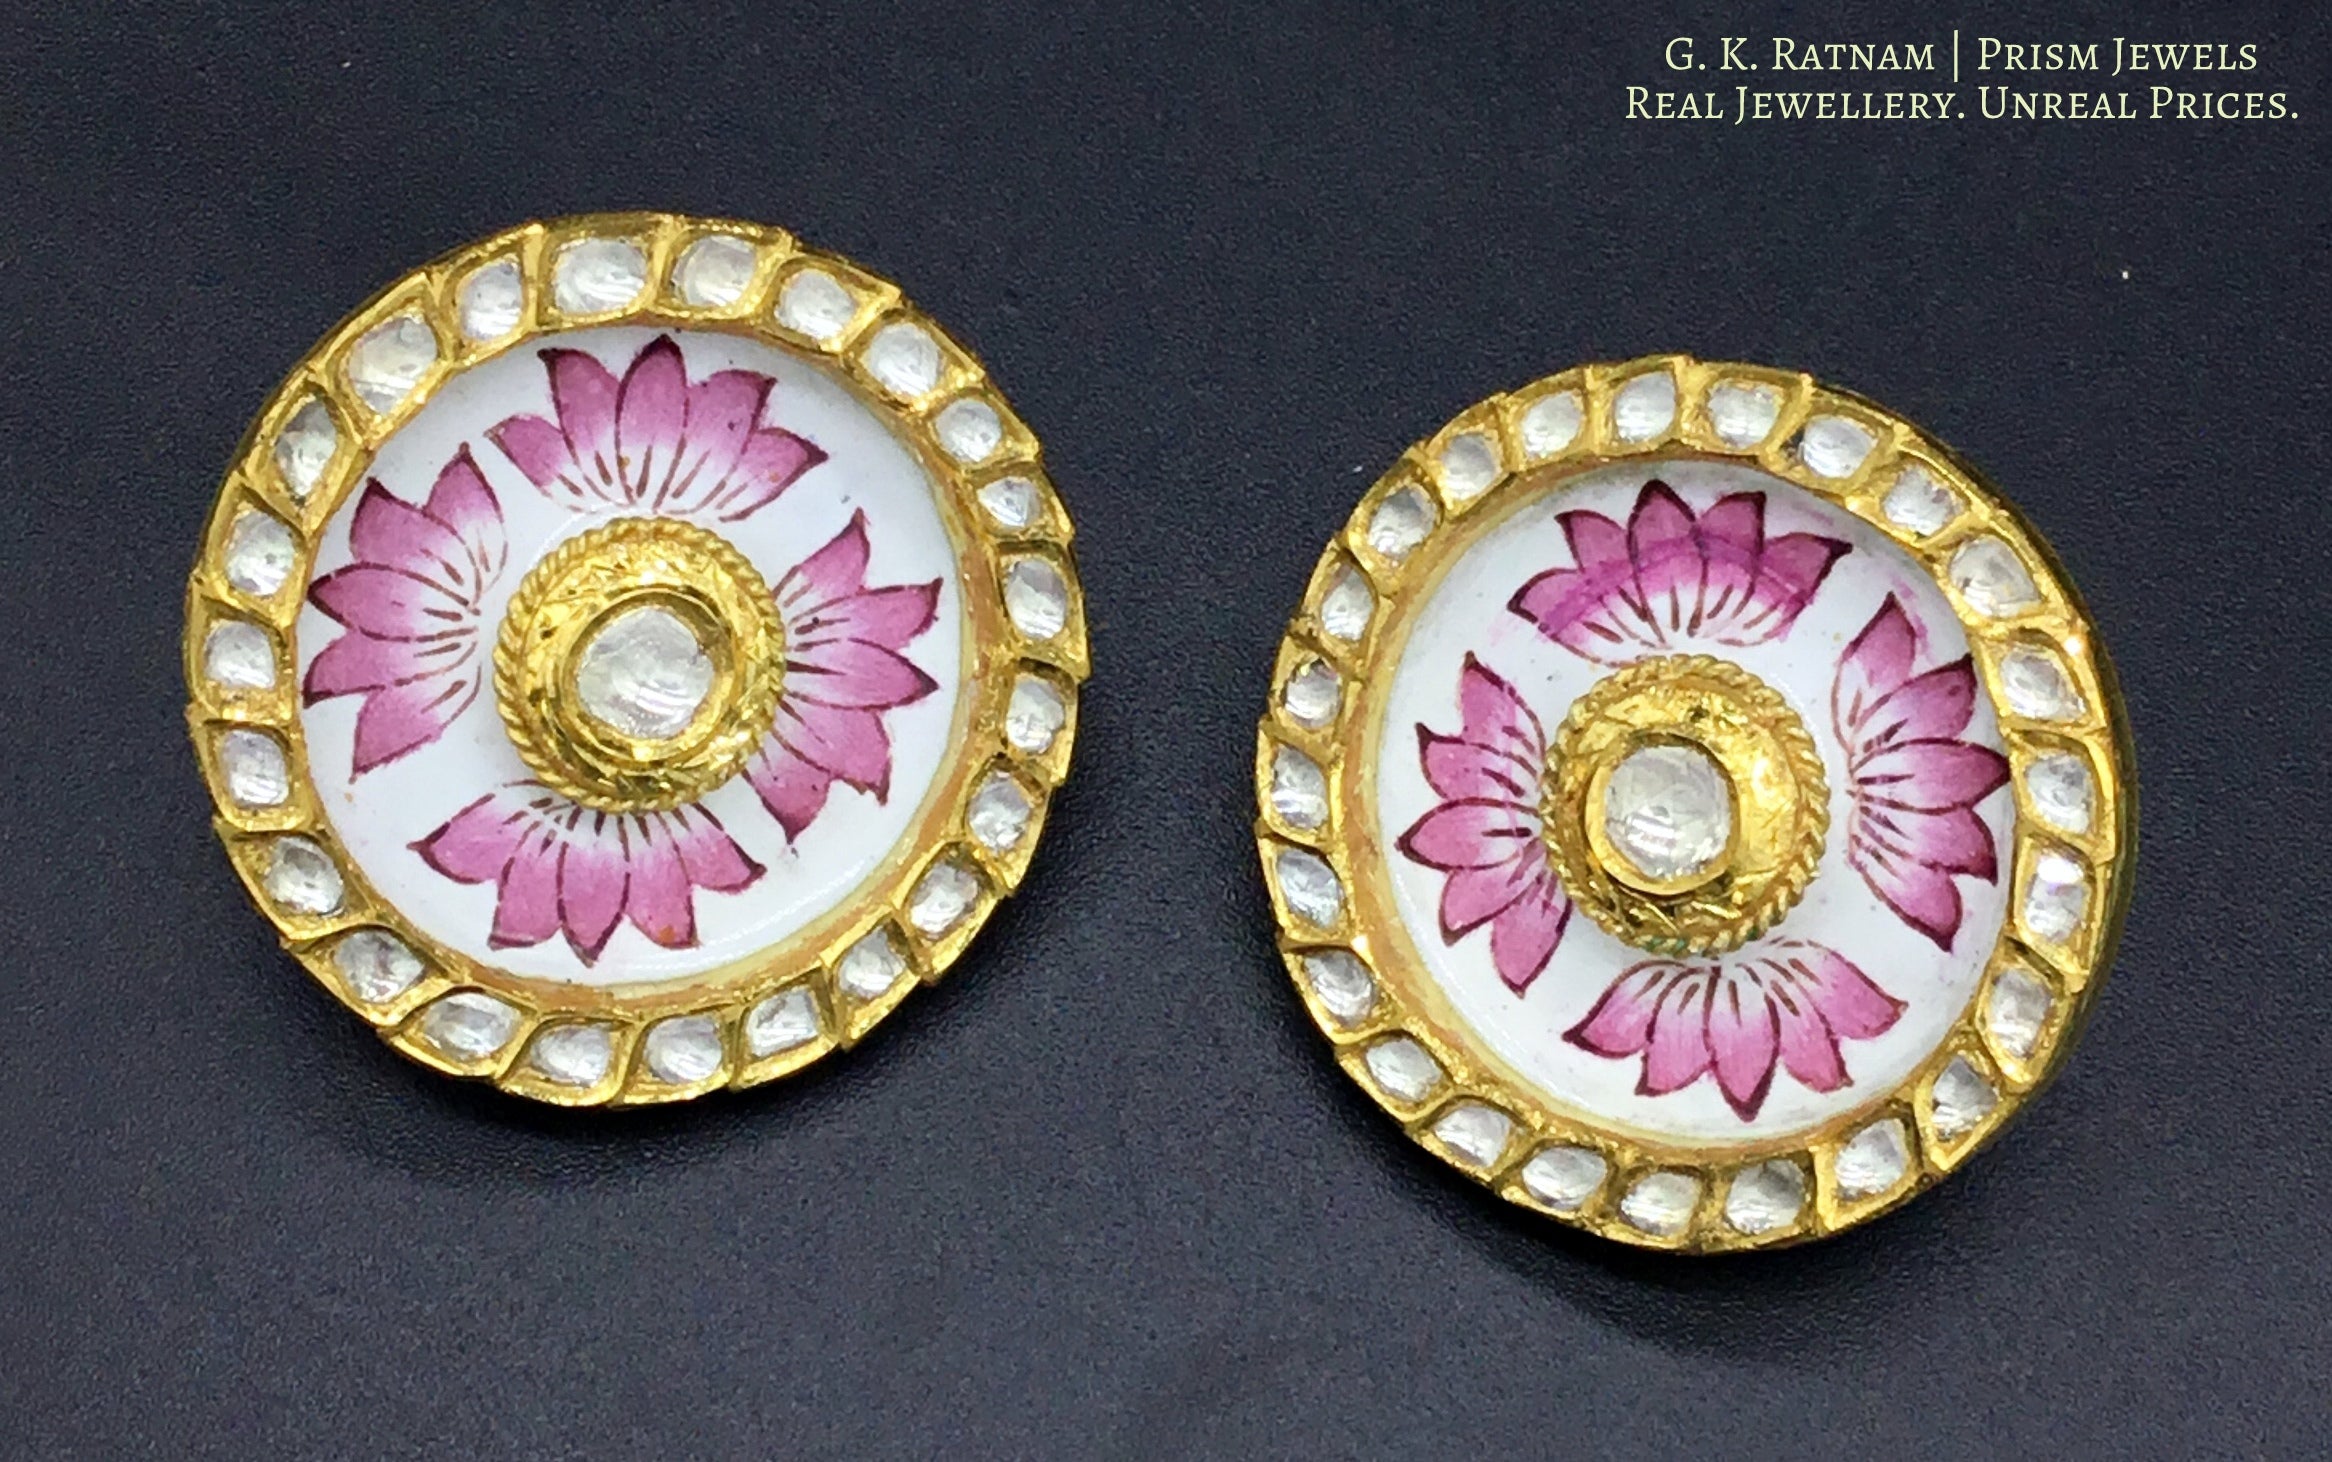 18k Gold and Diamond Polki Karanphool Earring Pair with intricate pink enamelling - gold diamond polki kundan meena jadau jewellery